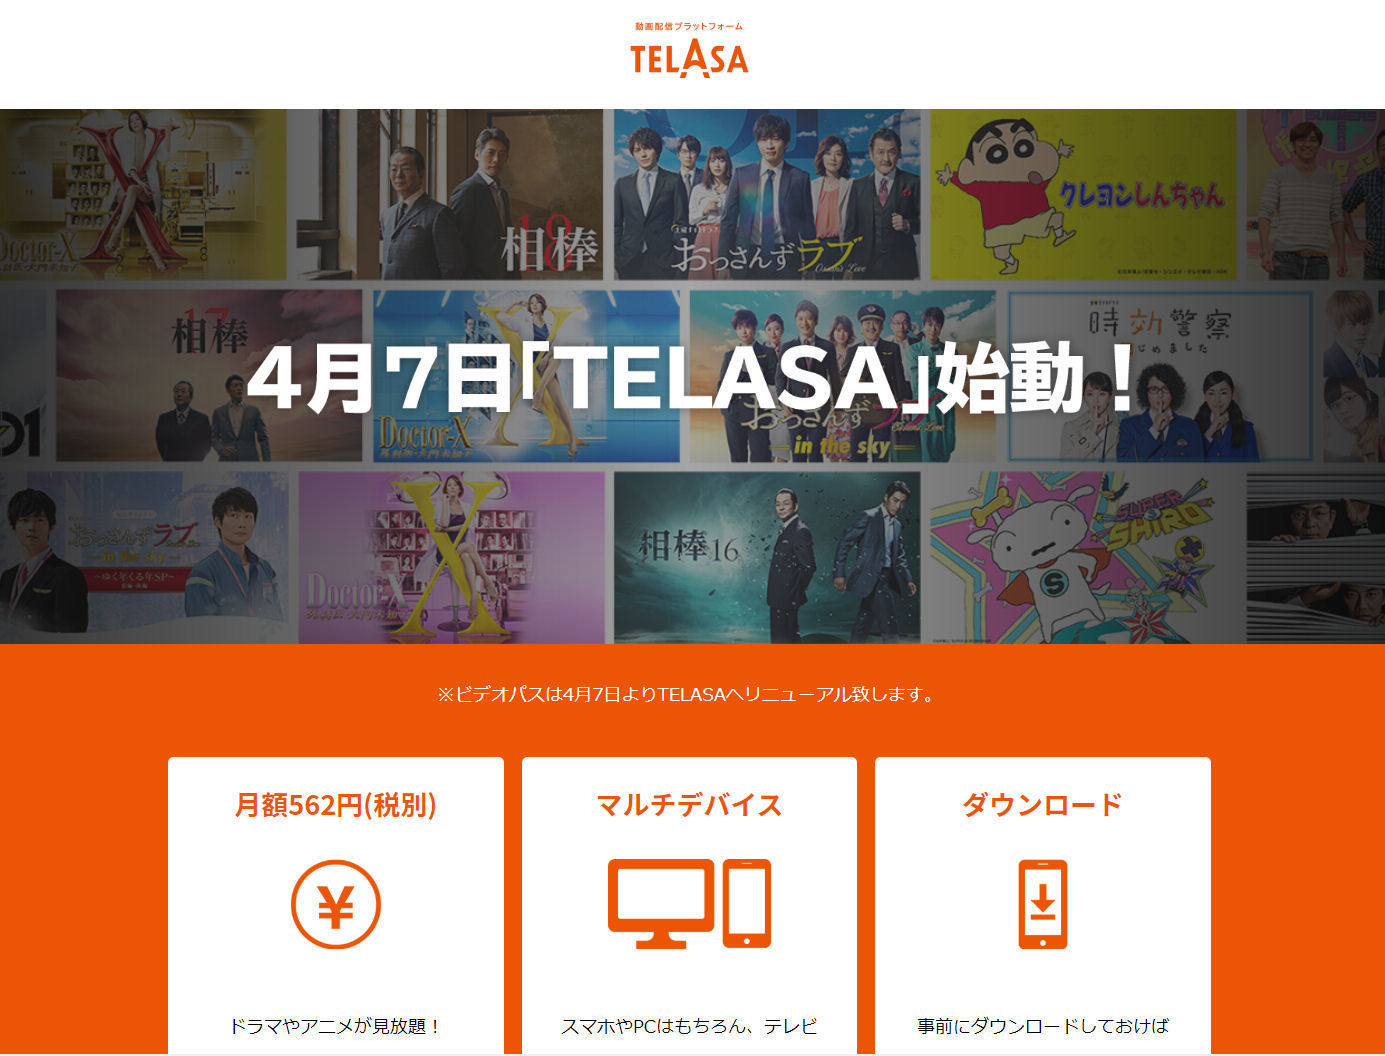 auの新動画配信サービス telasa 開始 月額500円のセットトップボックスも itmedia mobile